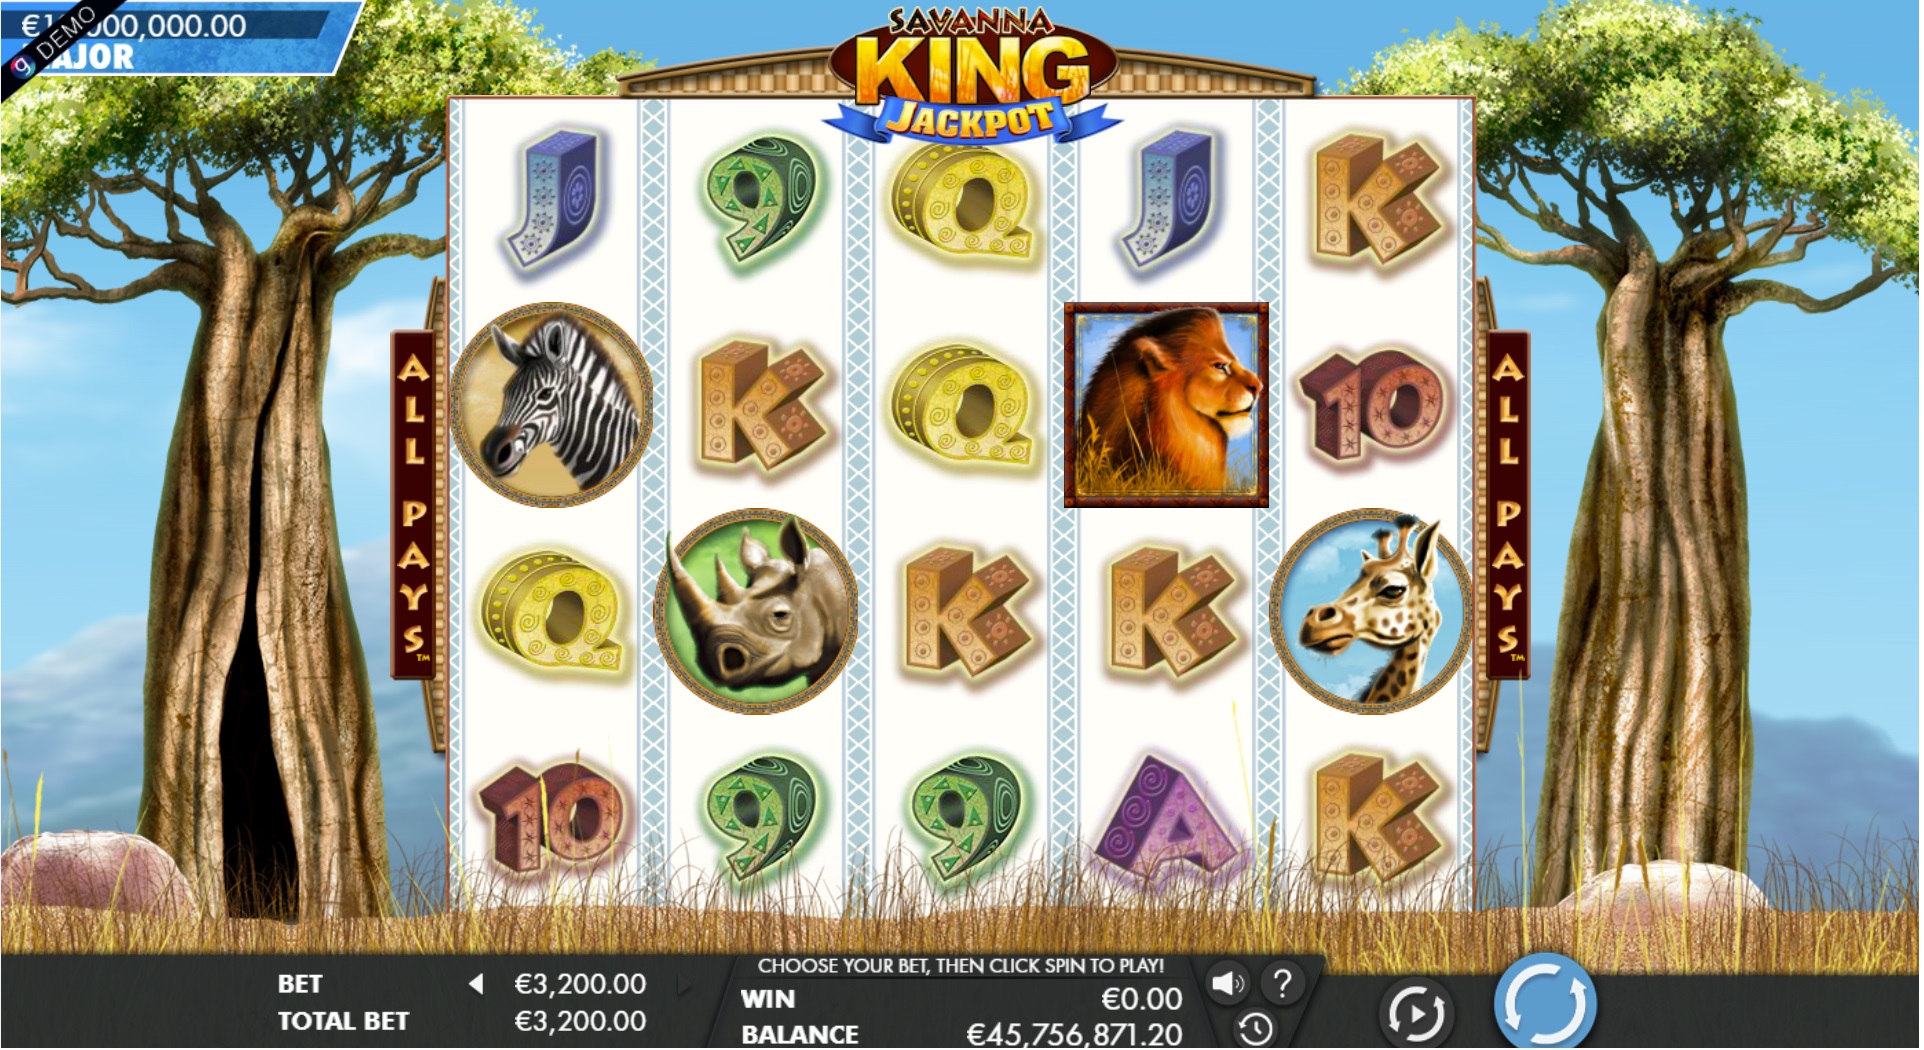 Play Sava King Jackpot